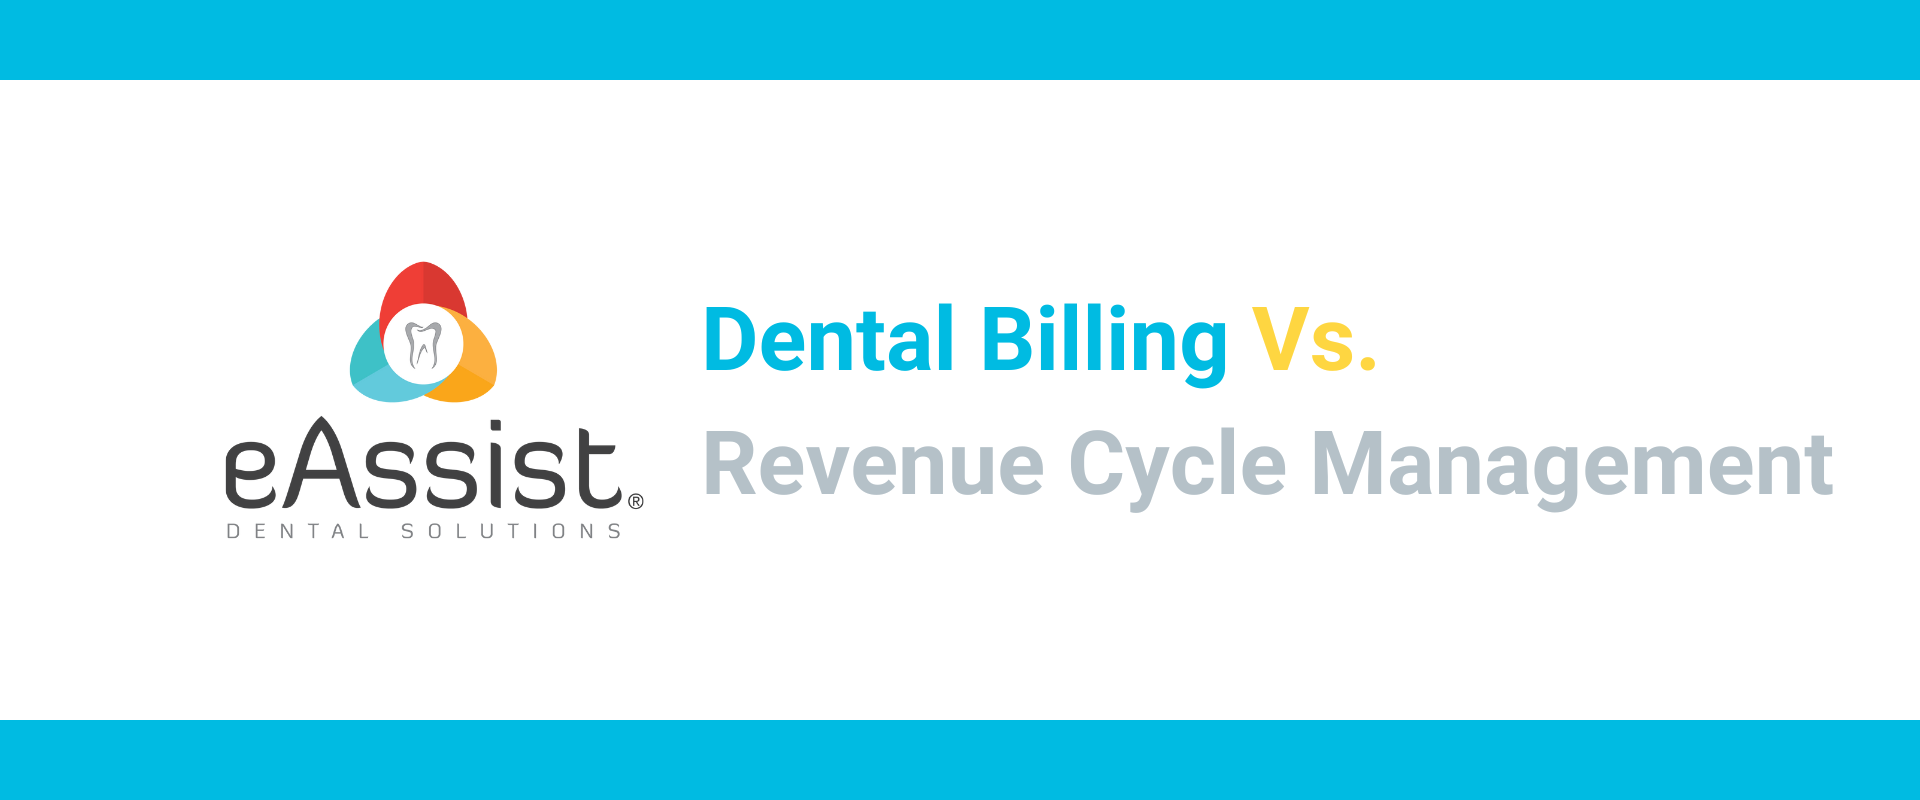 Dental Billing Vs. Revenue Cycle Management